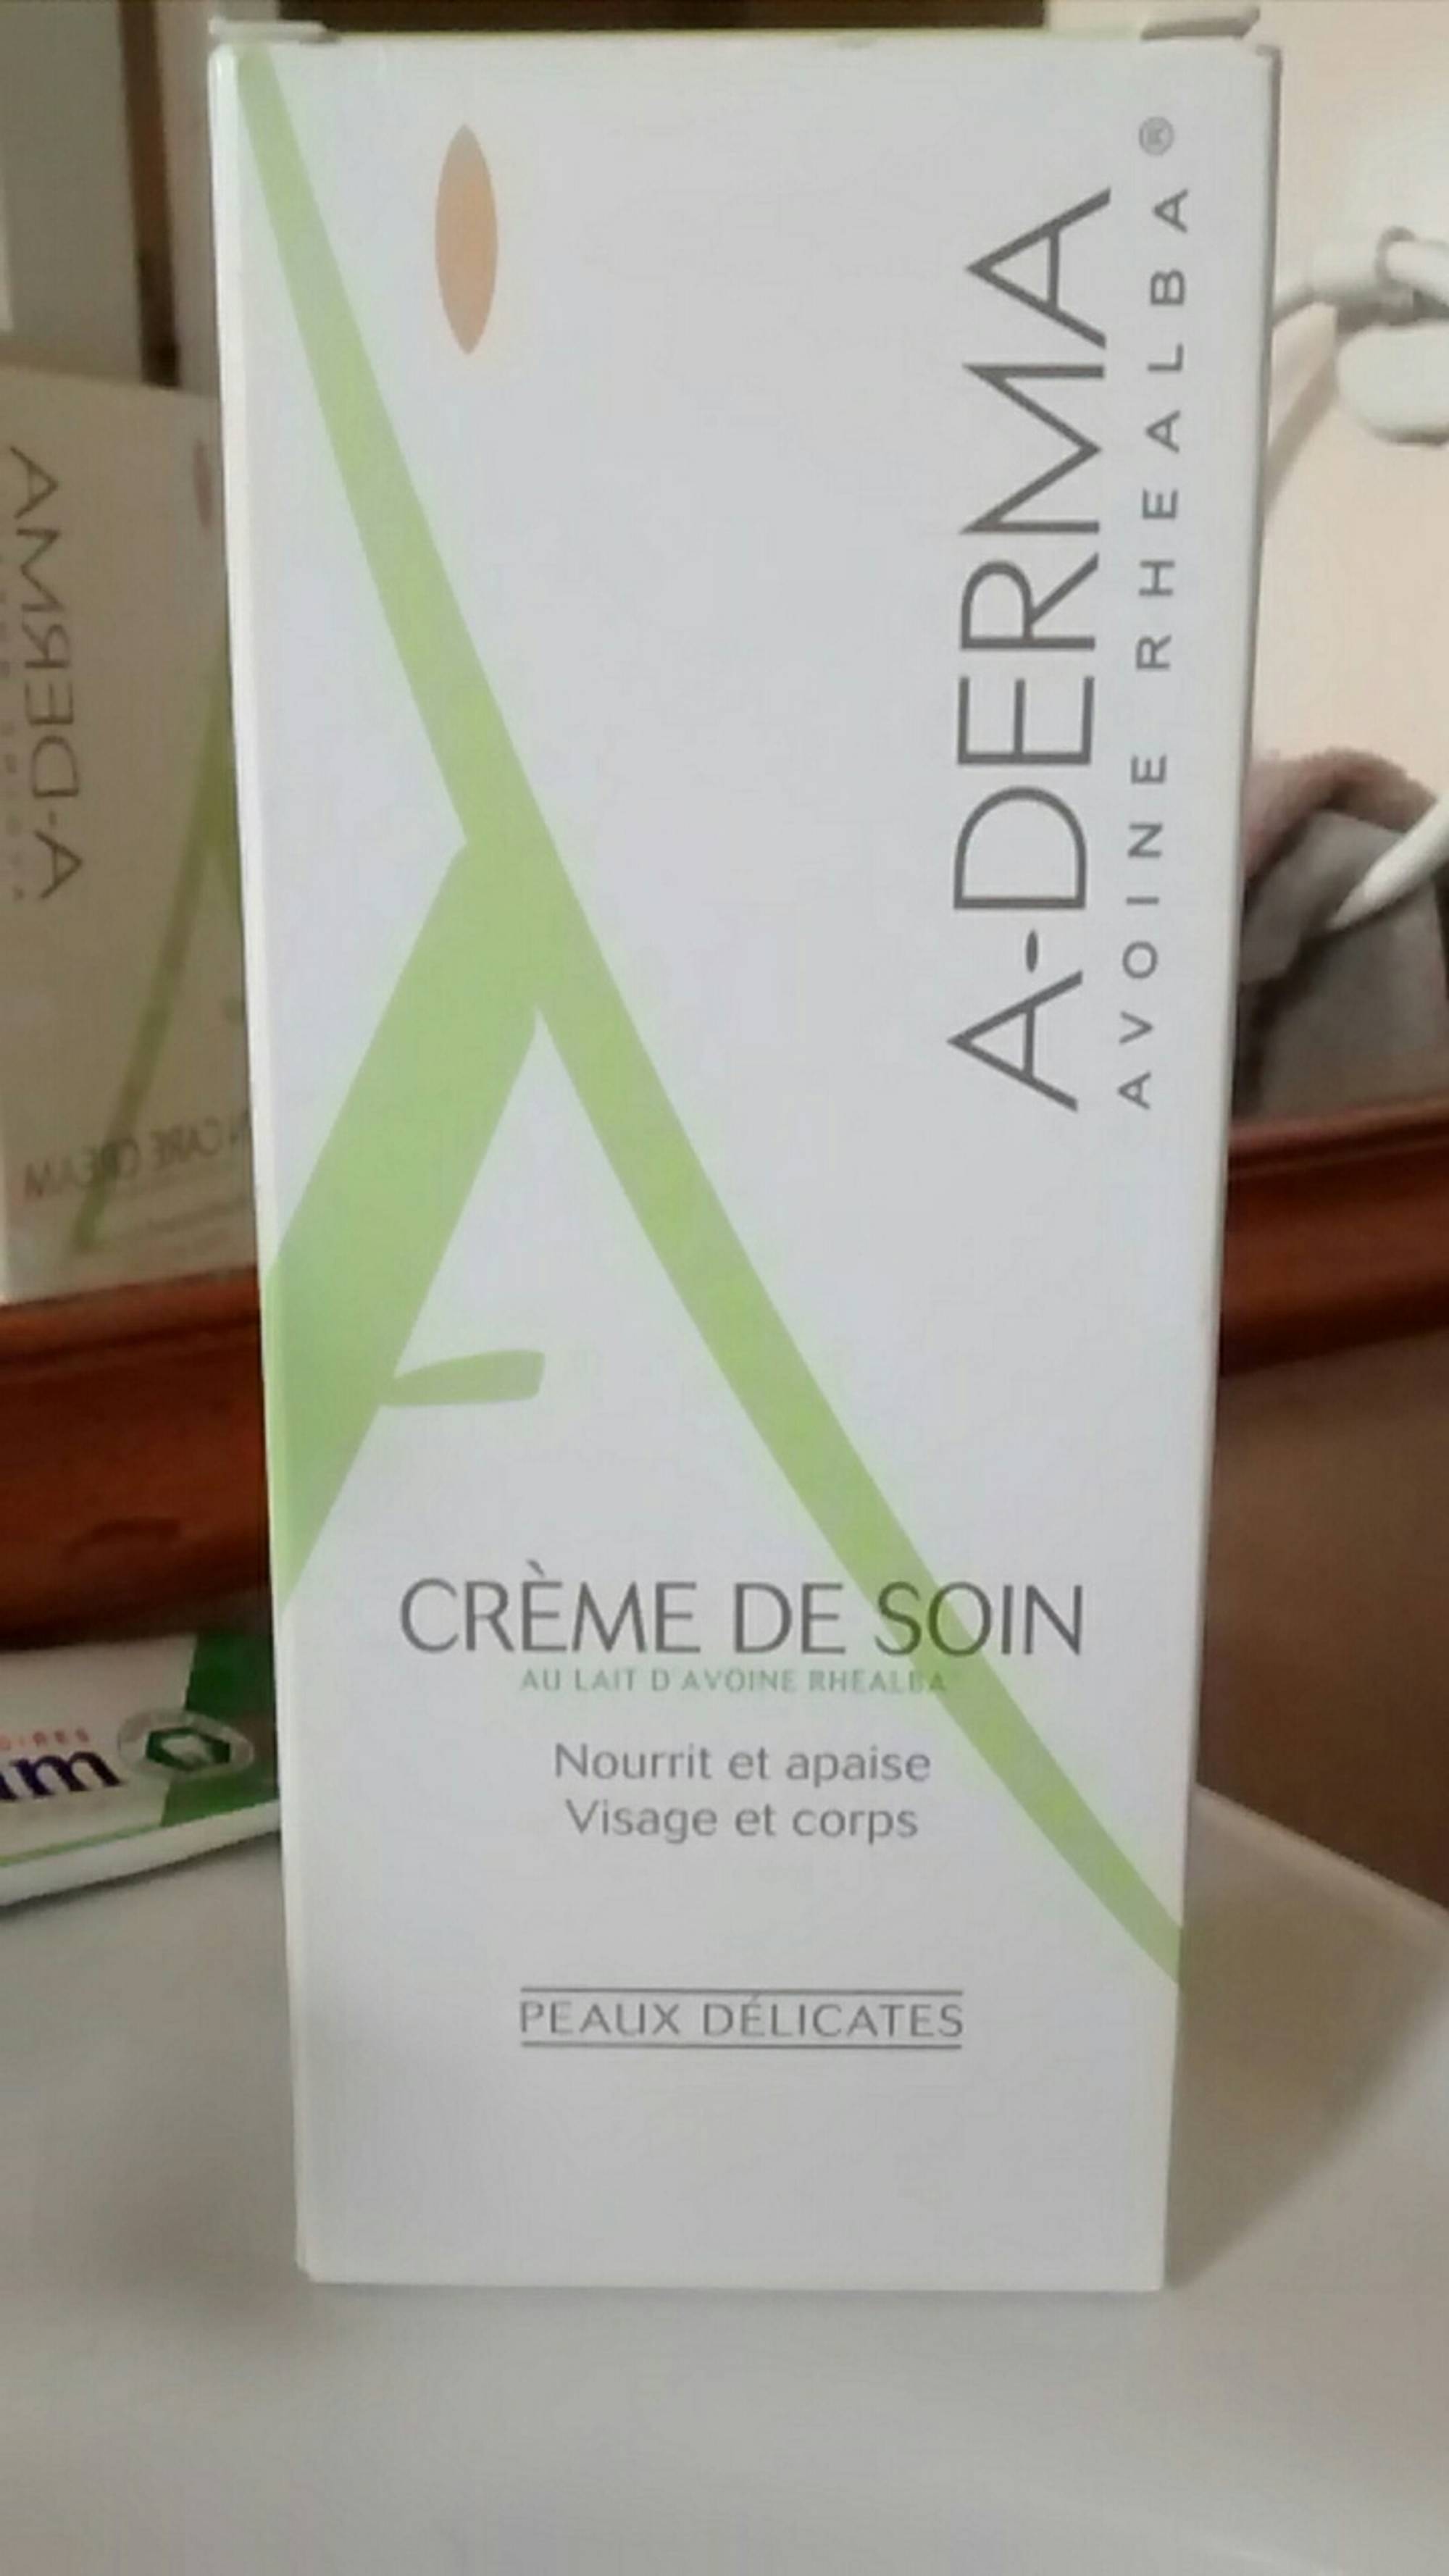 A-DERMA - Crème de soin au lait d'Avoine Rhealba